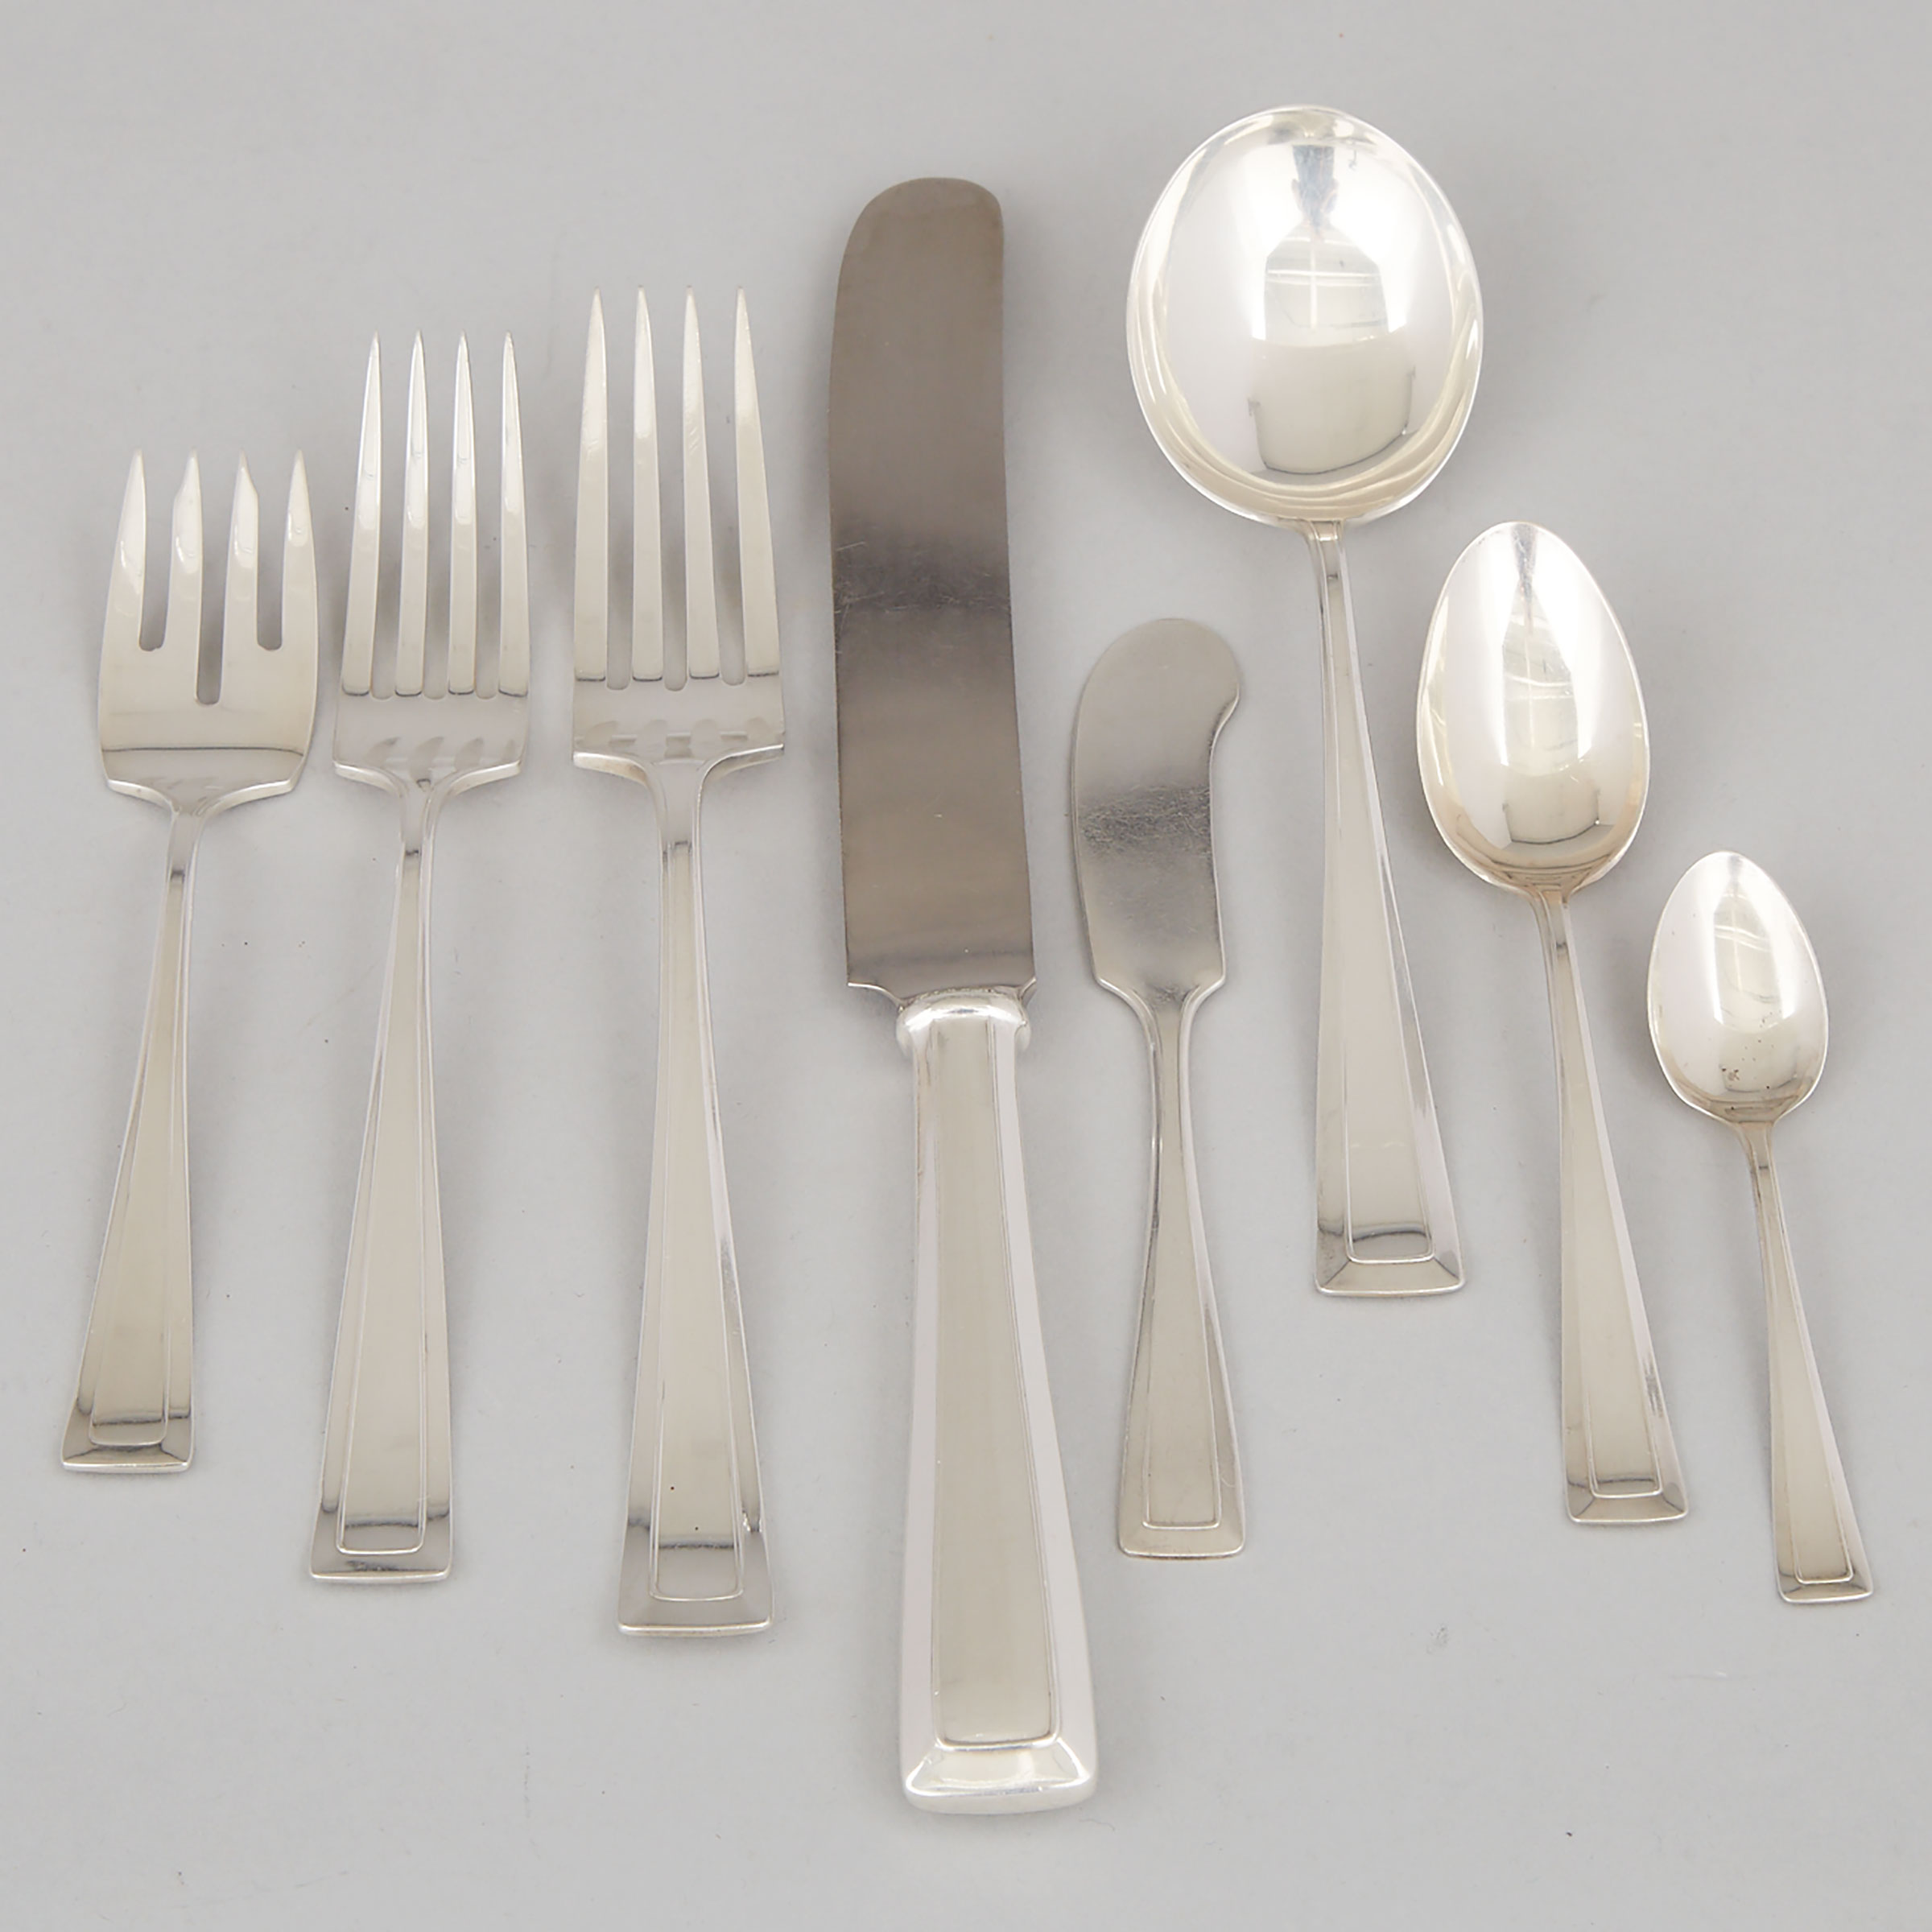 American Silver ‘Cabot’ Pattern Flatware, Wallace Silversmiths, Wallingford, Ct., 20th century